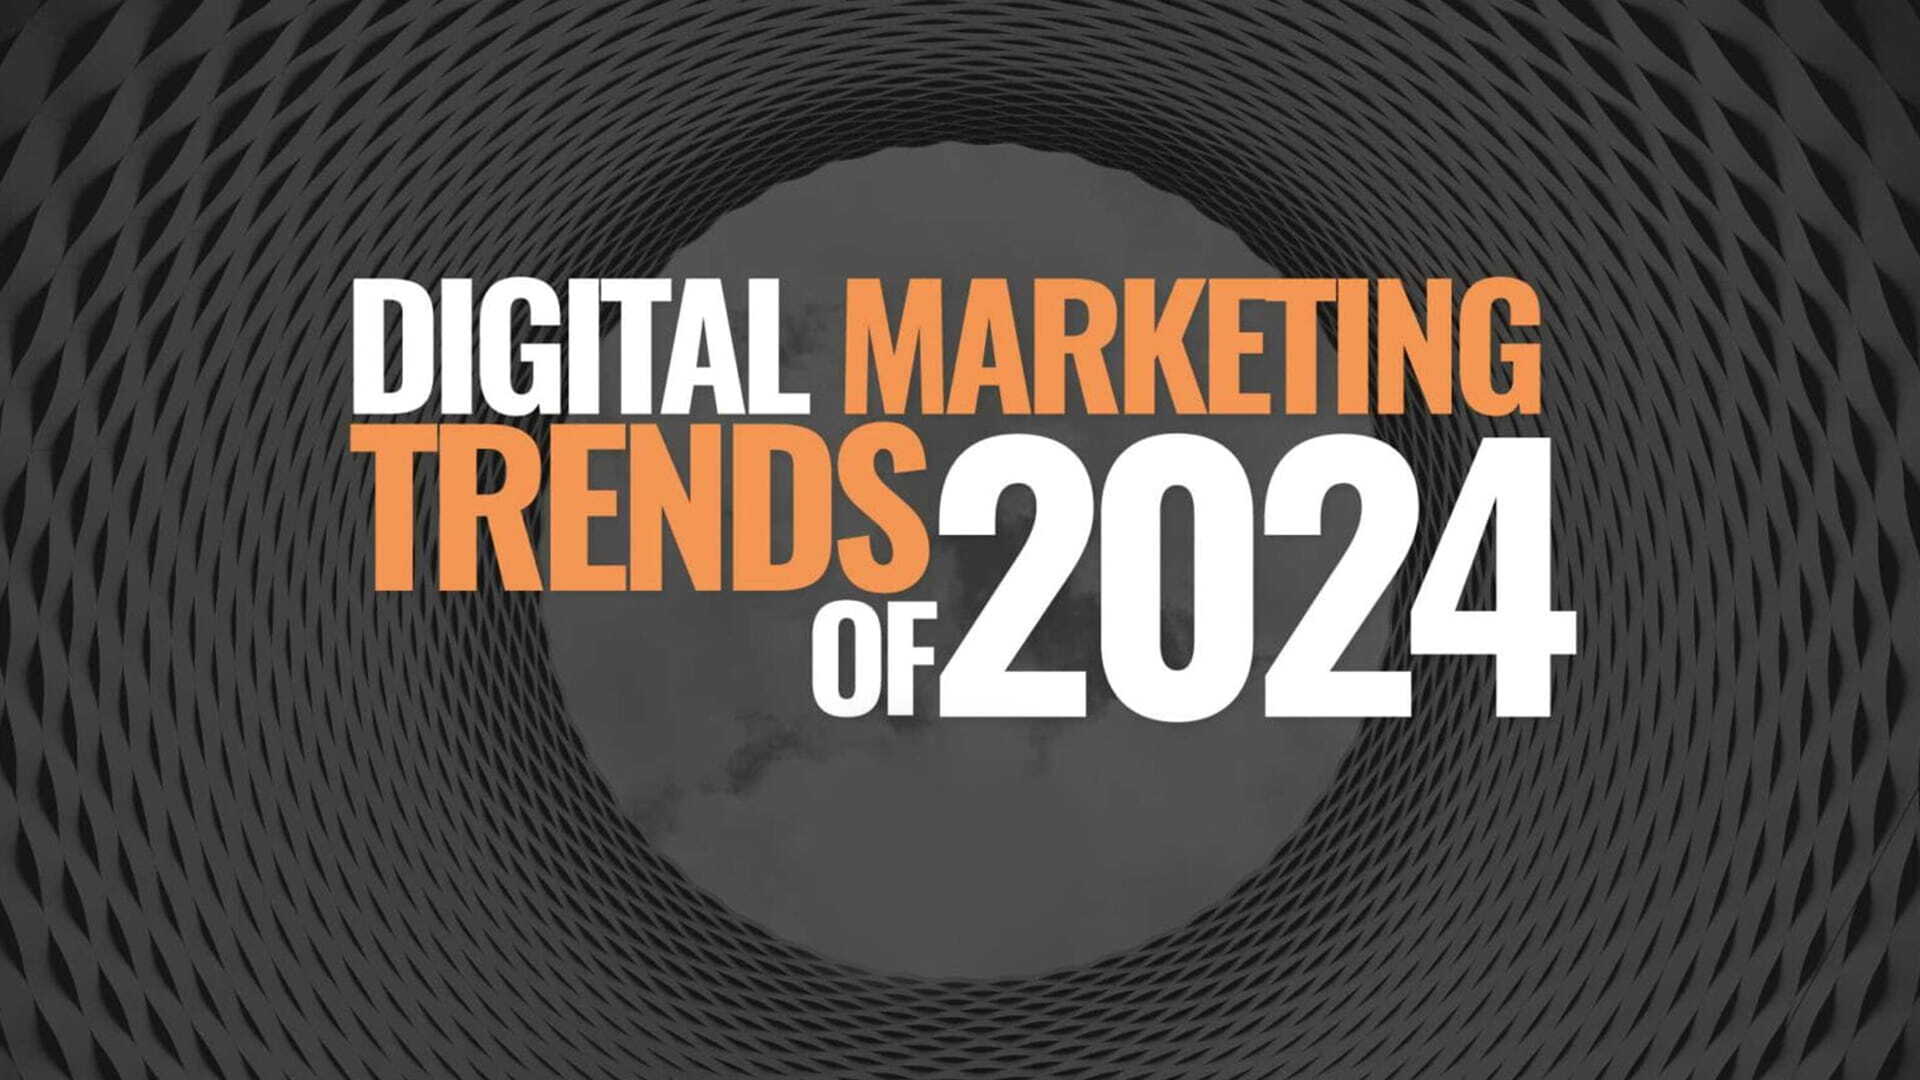 TOP digital marketing trends for 2024, digital planner, trendsetters, TOP digital marketing trend